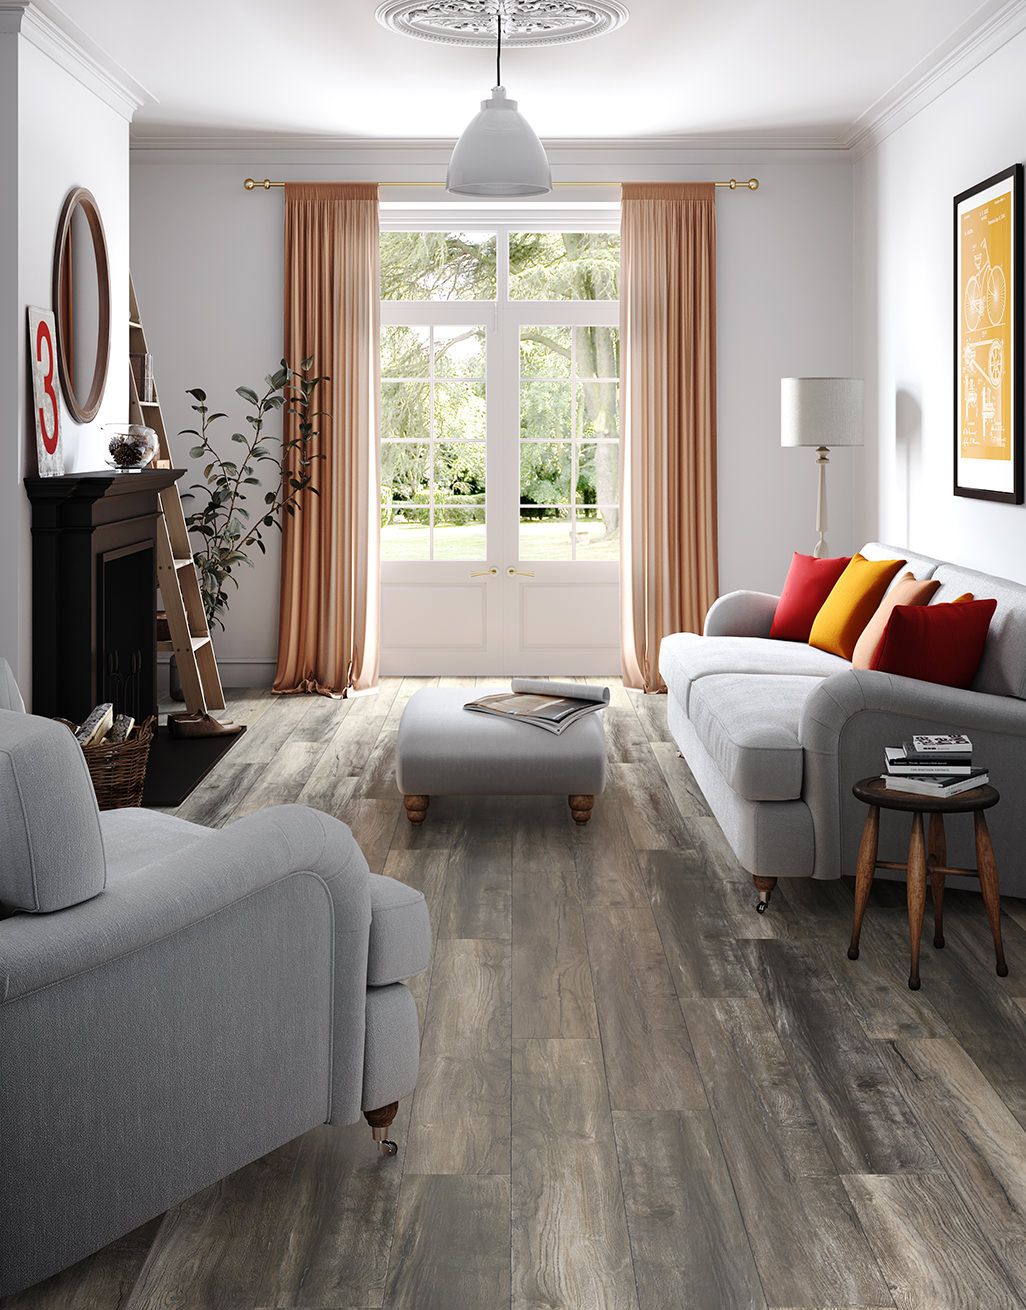 Villa - Harbour Oak Grey Laminate Flooring 4